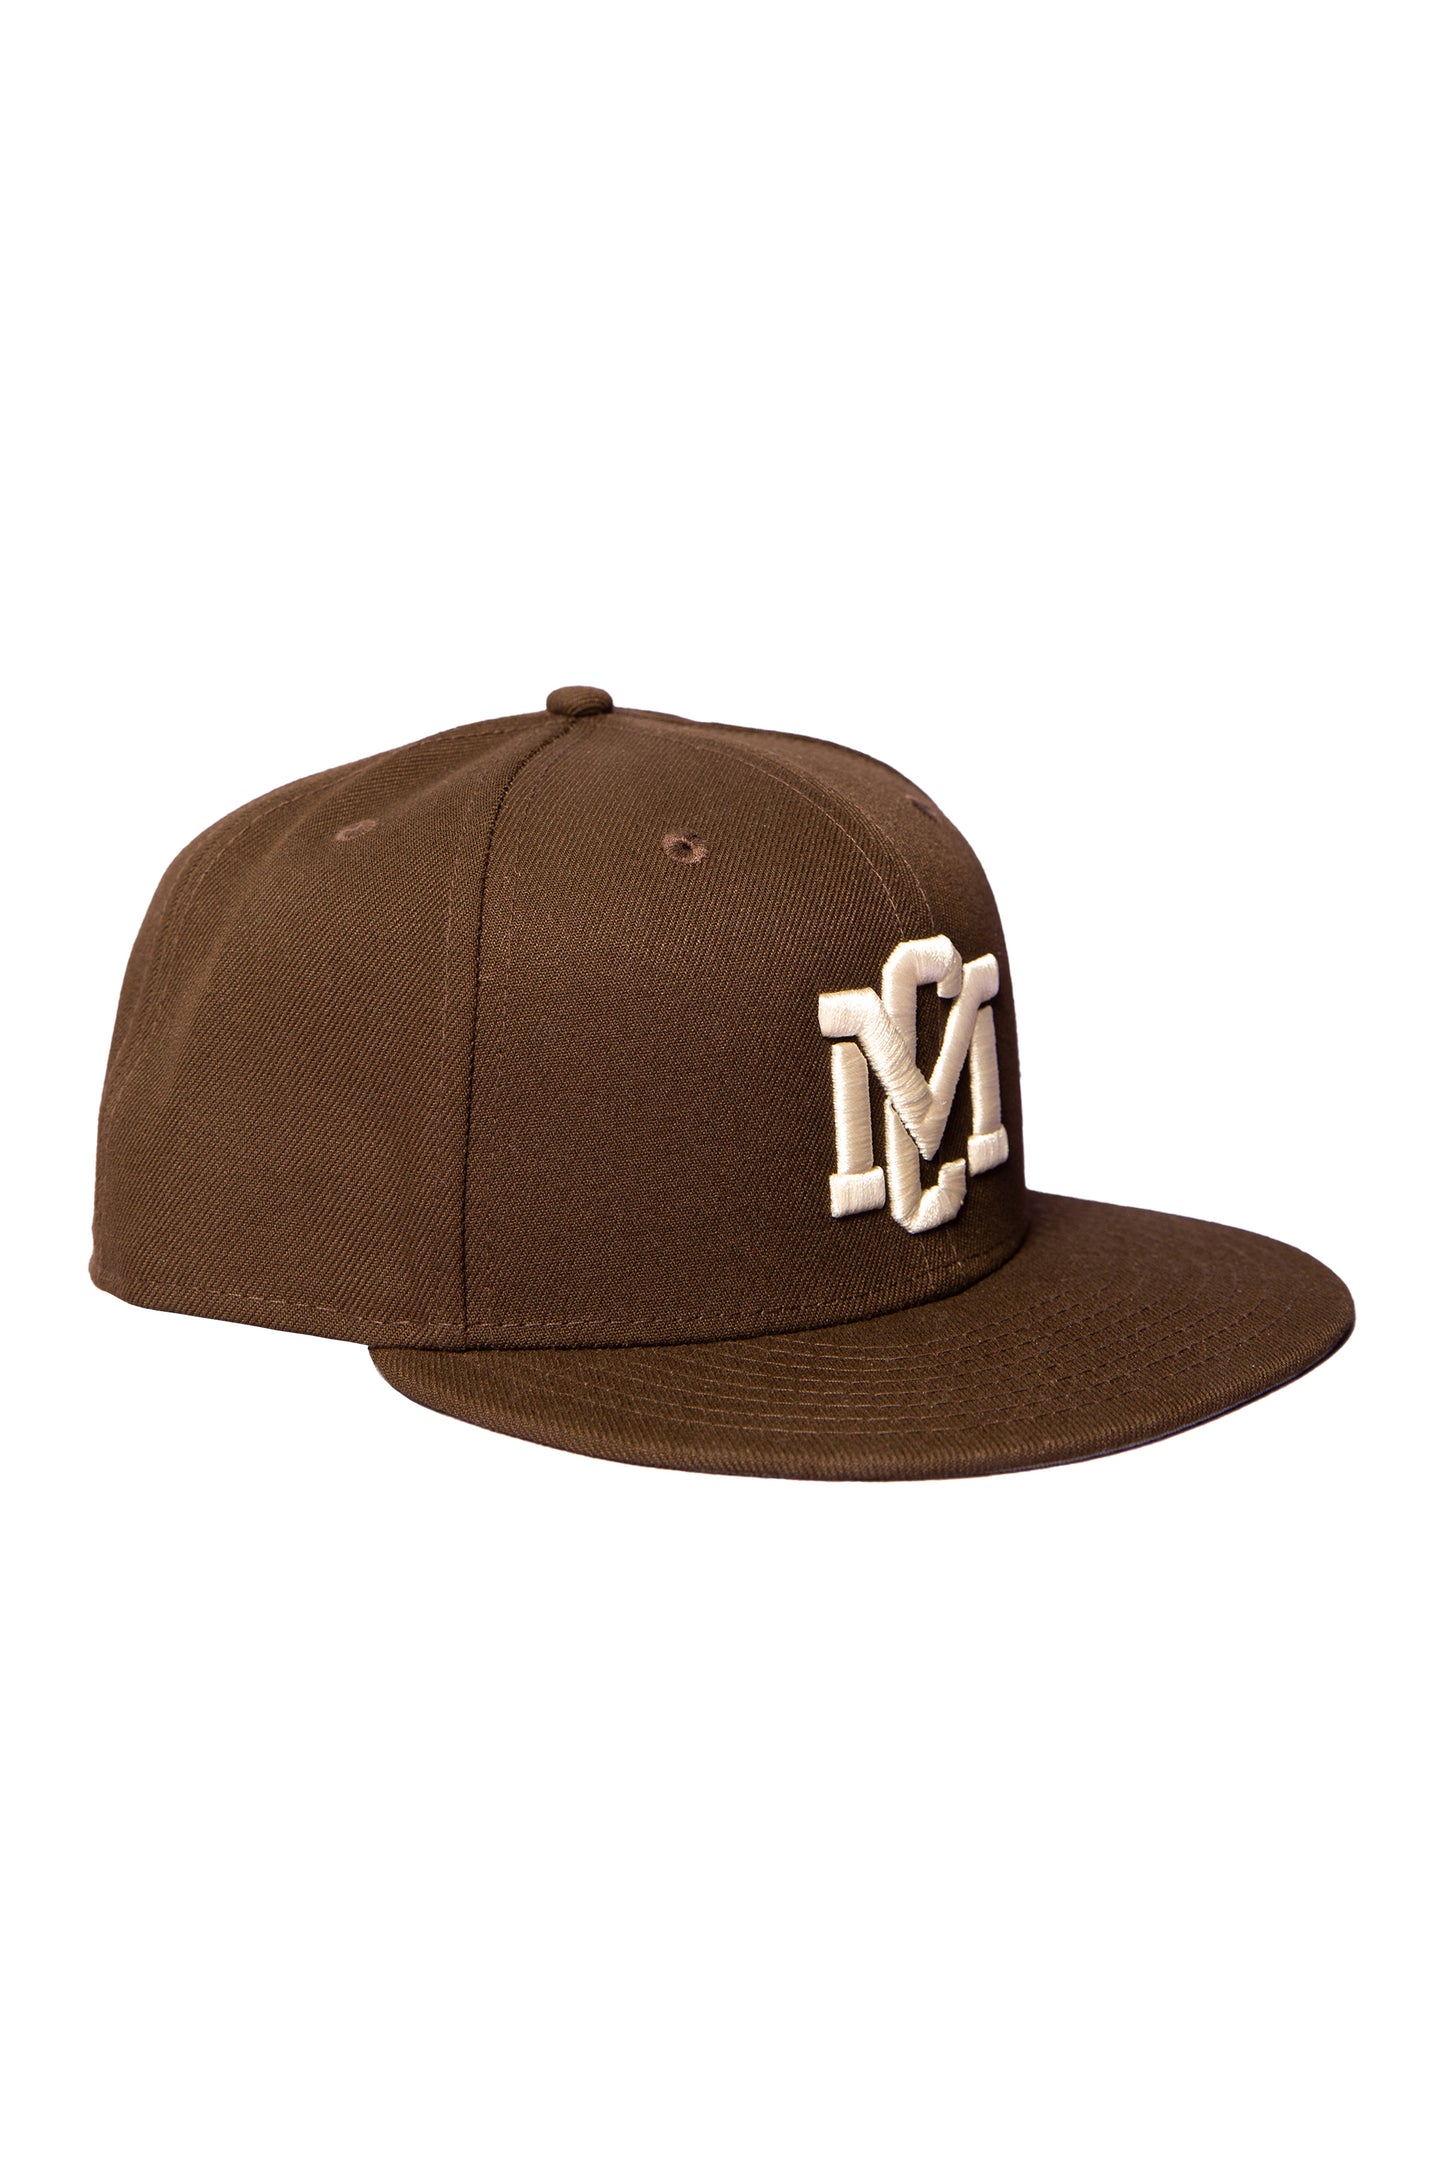 MCV Mocha Brown Fitted Hat